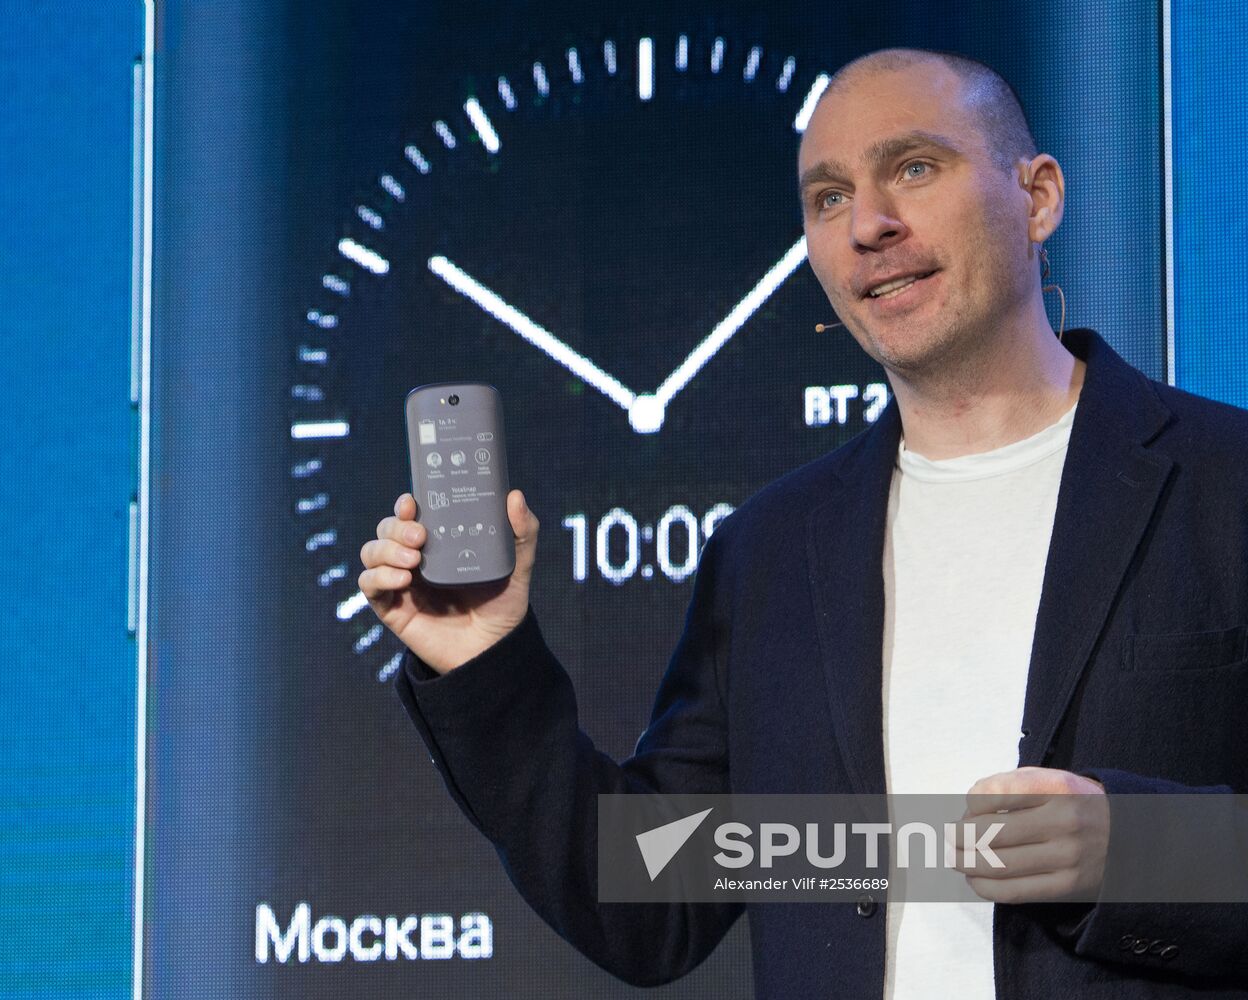 YotaPhone 2 smart phone presented in Russia